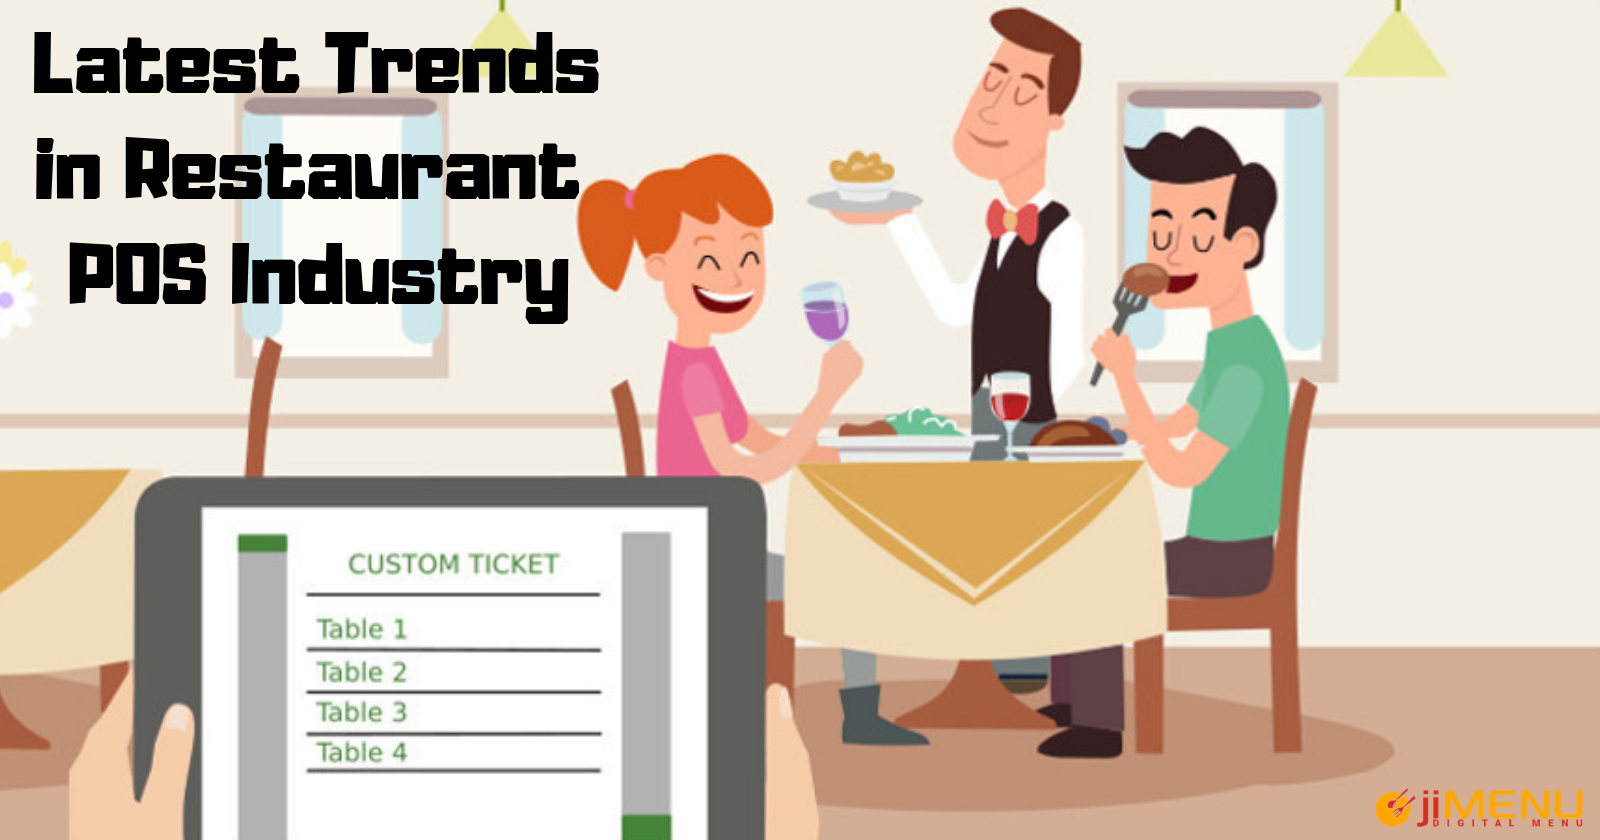 Major Trends in Restaurant POS Industry for 2019